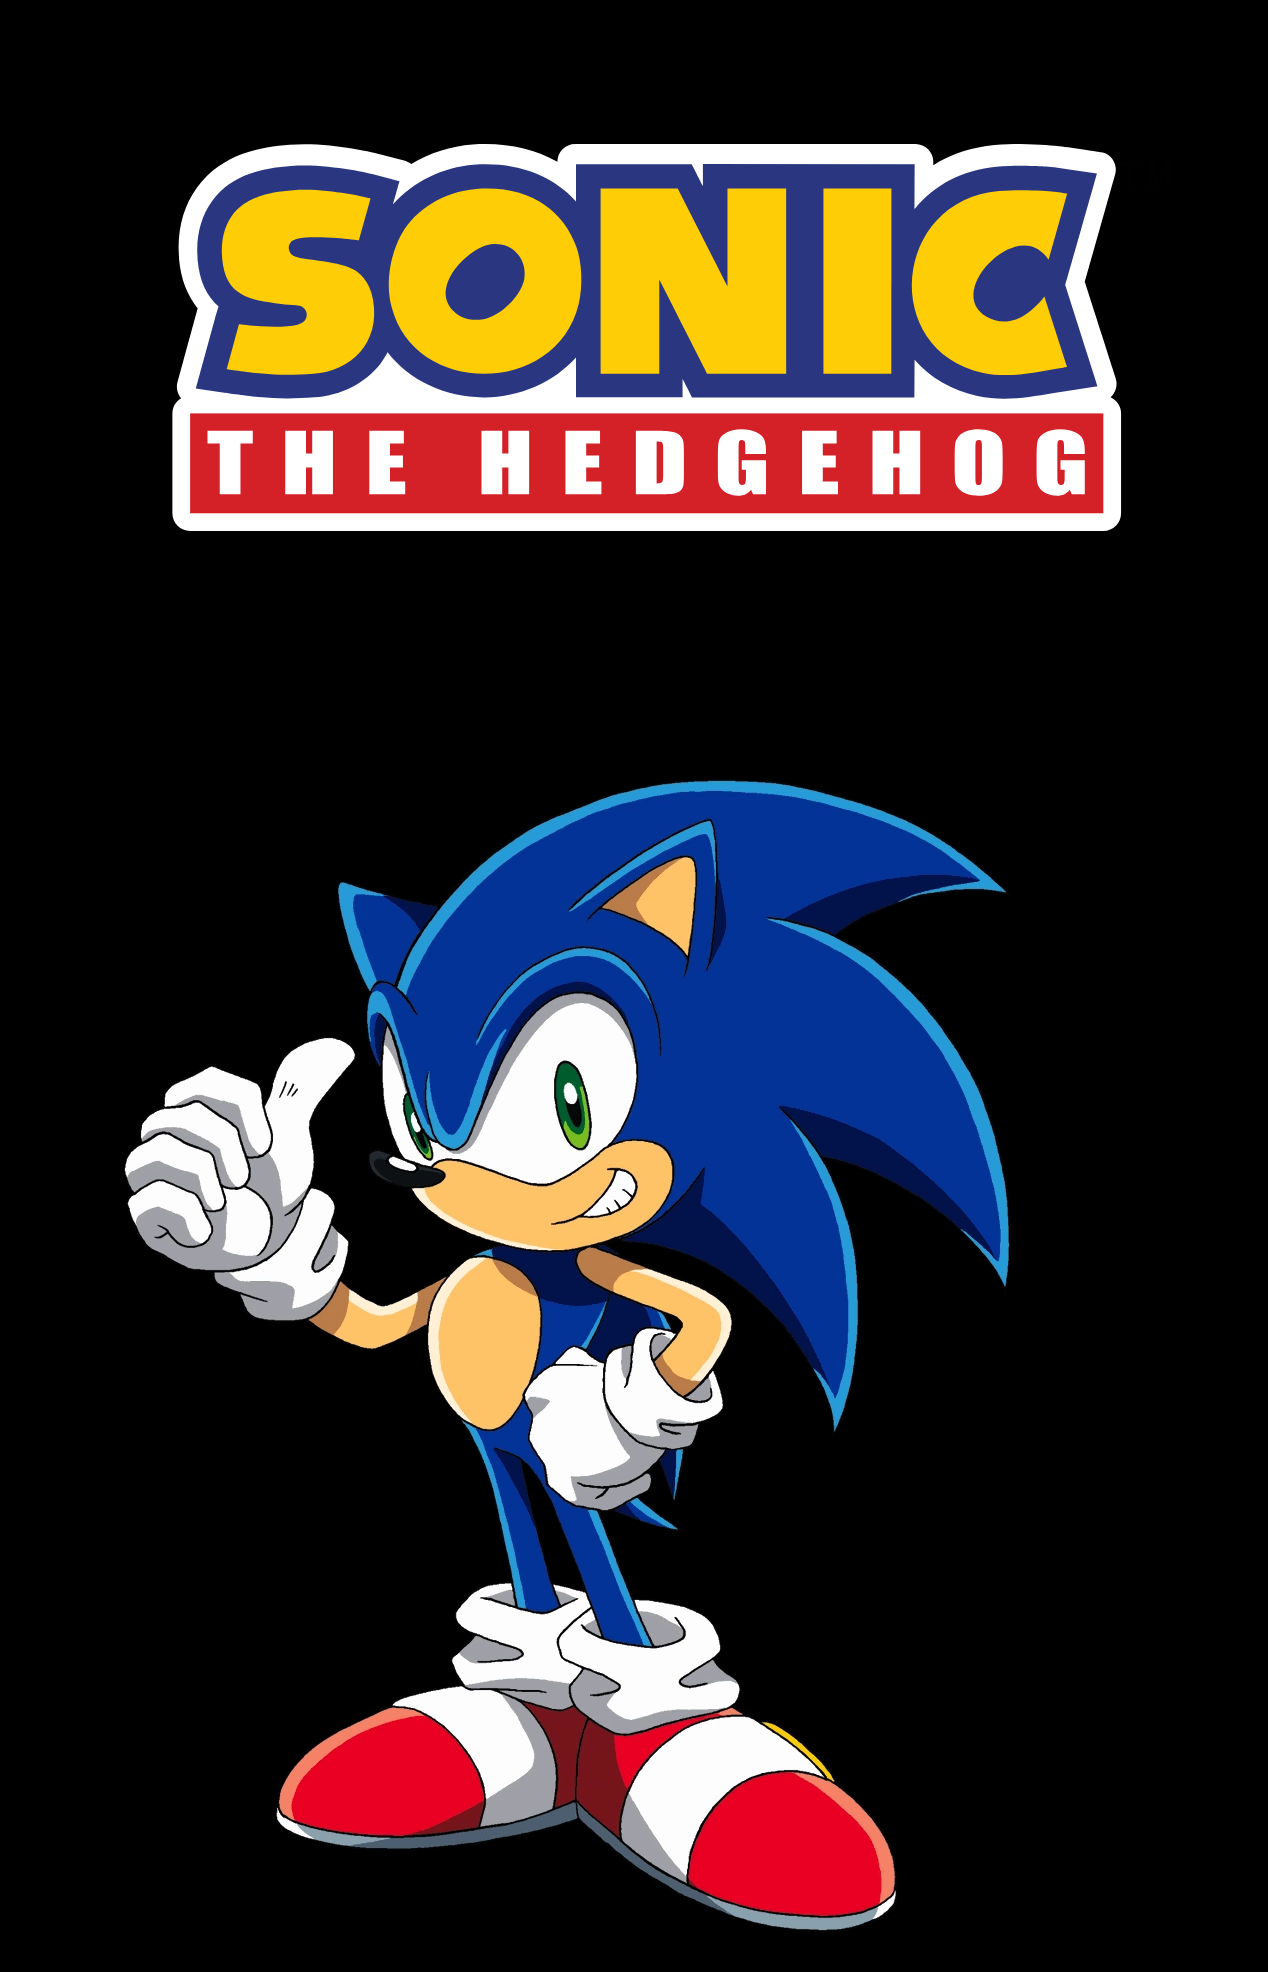 Sonic the Hedgehog: Sonic Forever